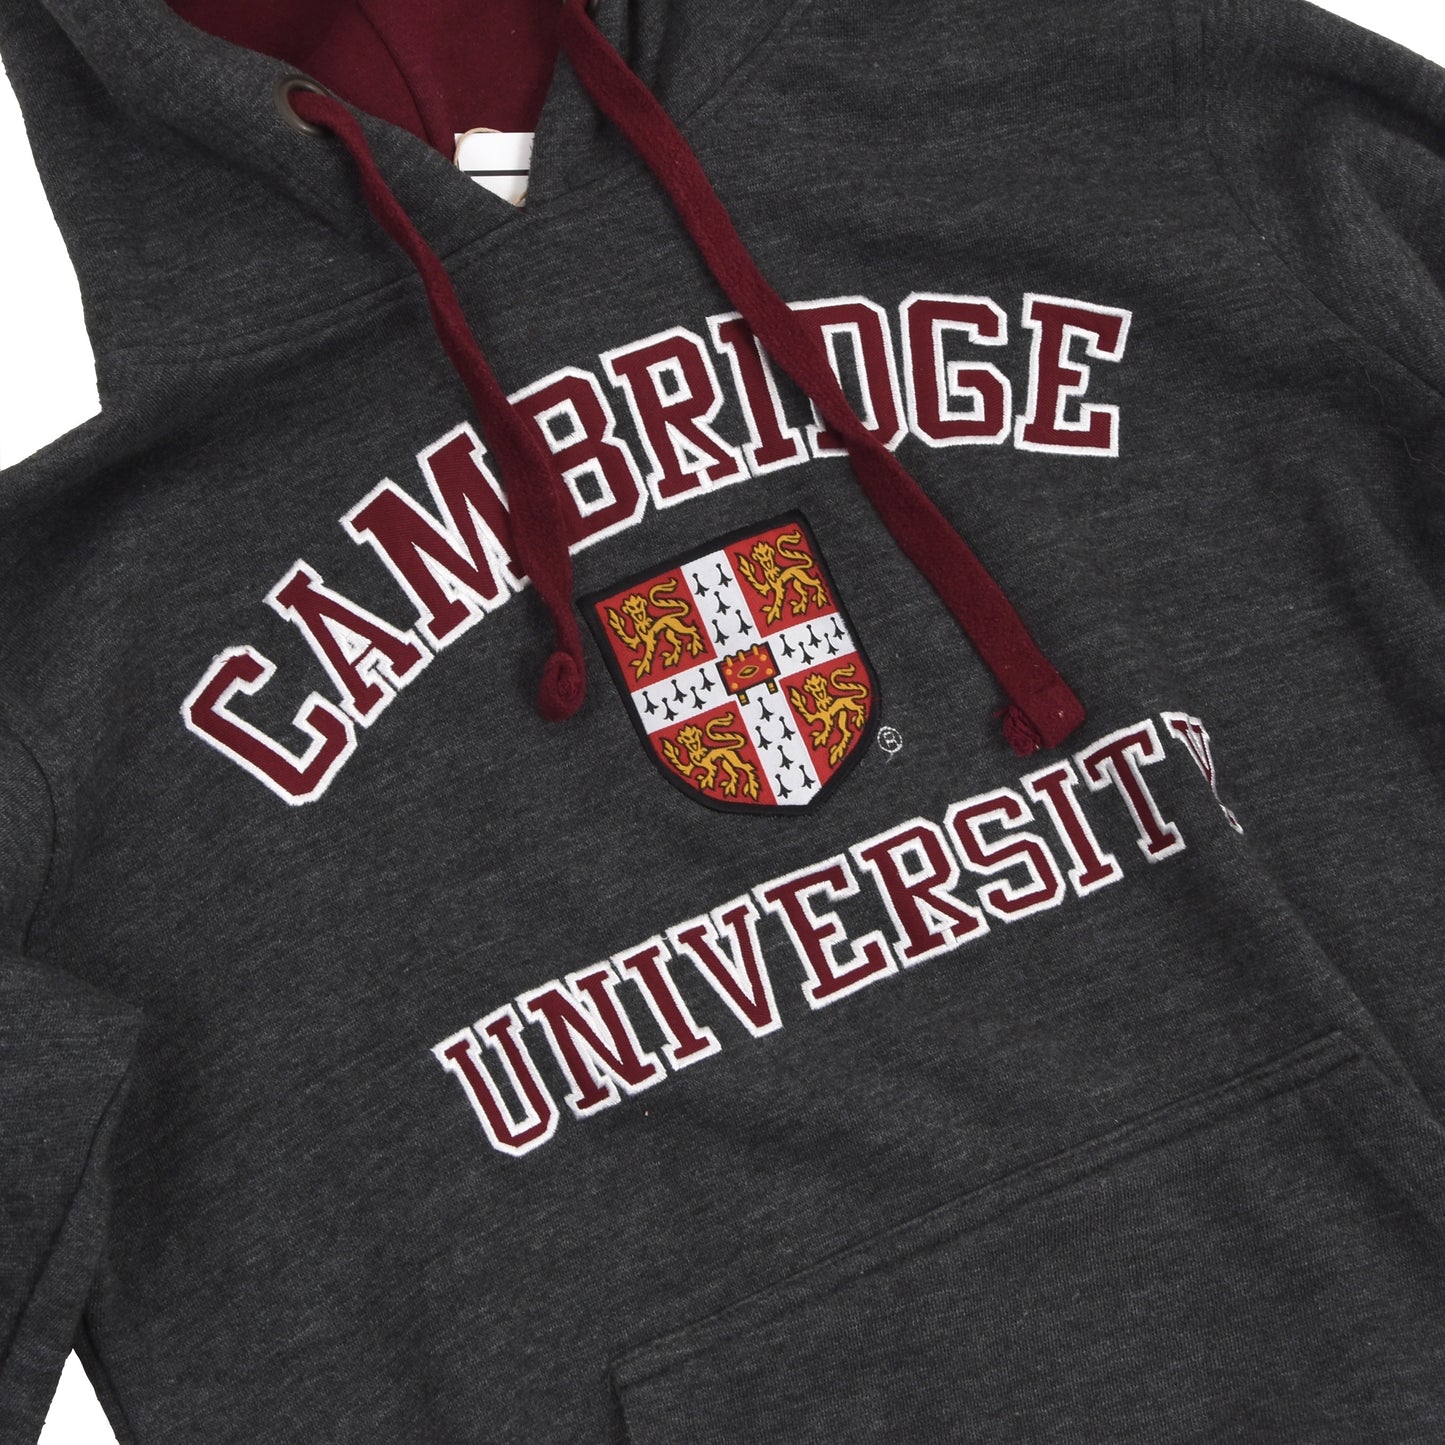 Kapuzen-Sweatshirt der University of Cambridge Größe S - Grau